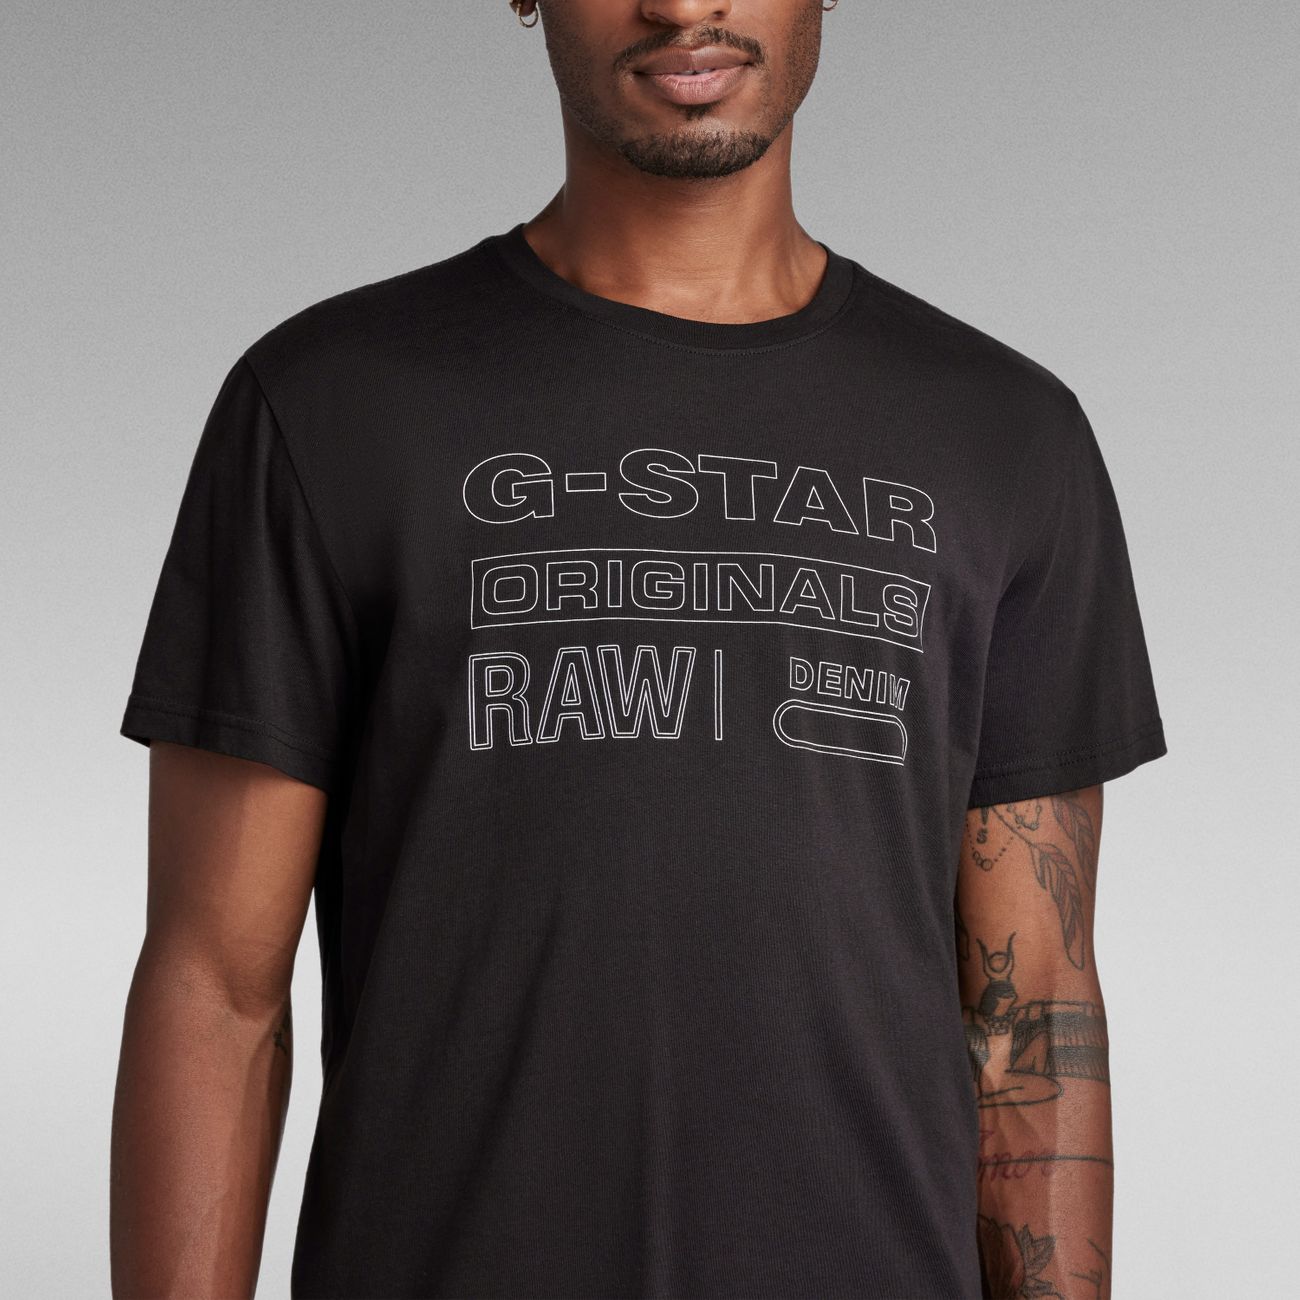 G-STAR RAW DENIM ORIGINALS R T Herren T-Shirt